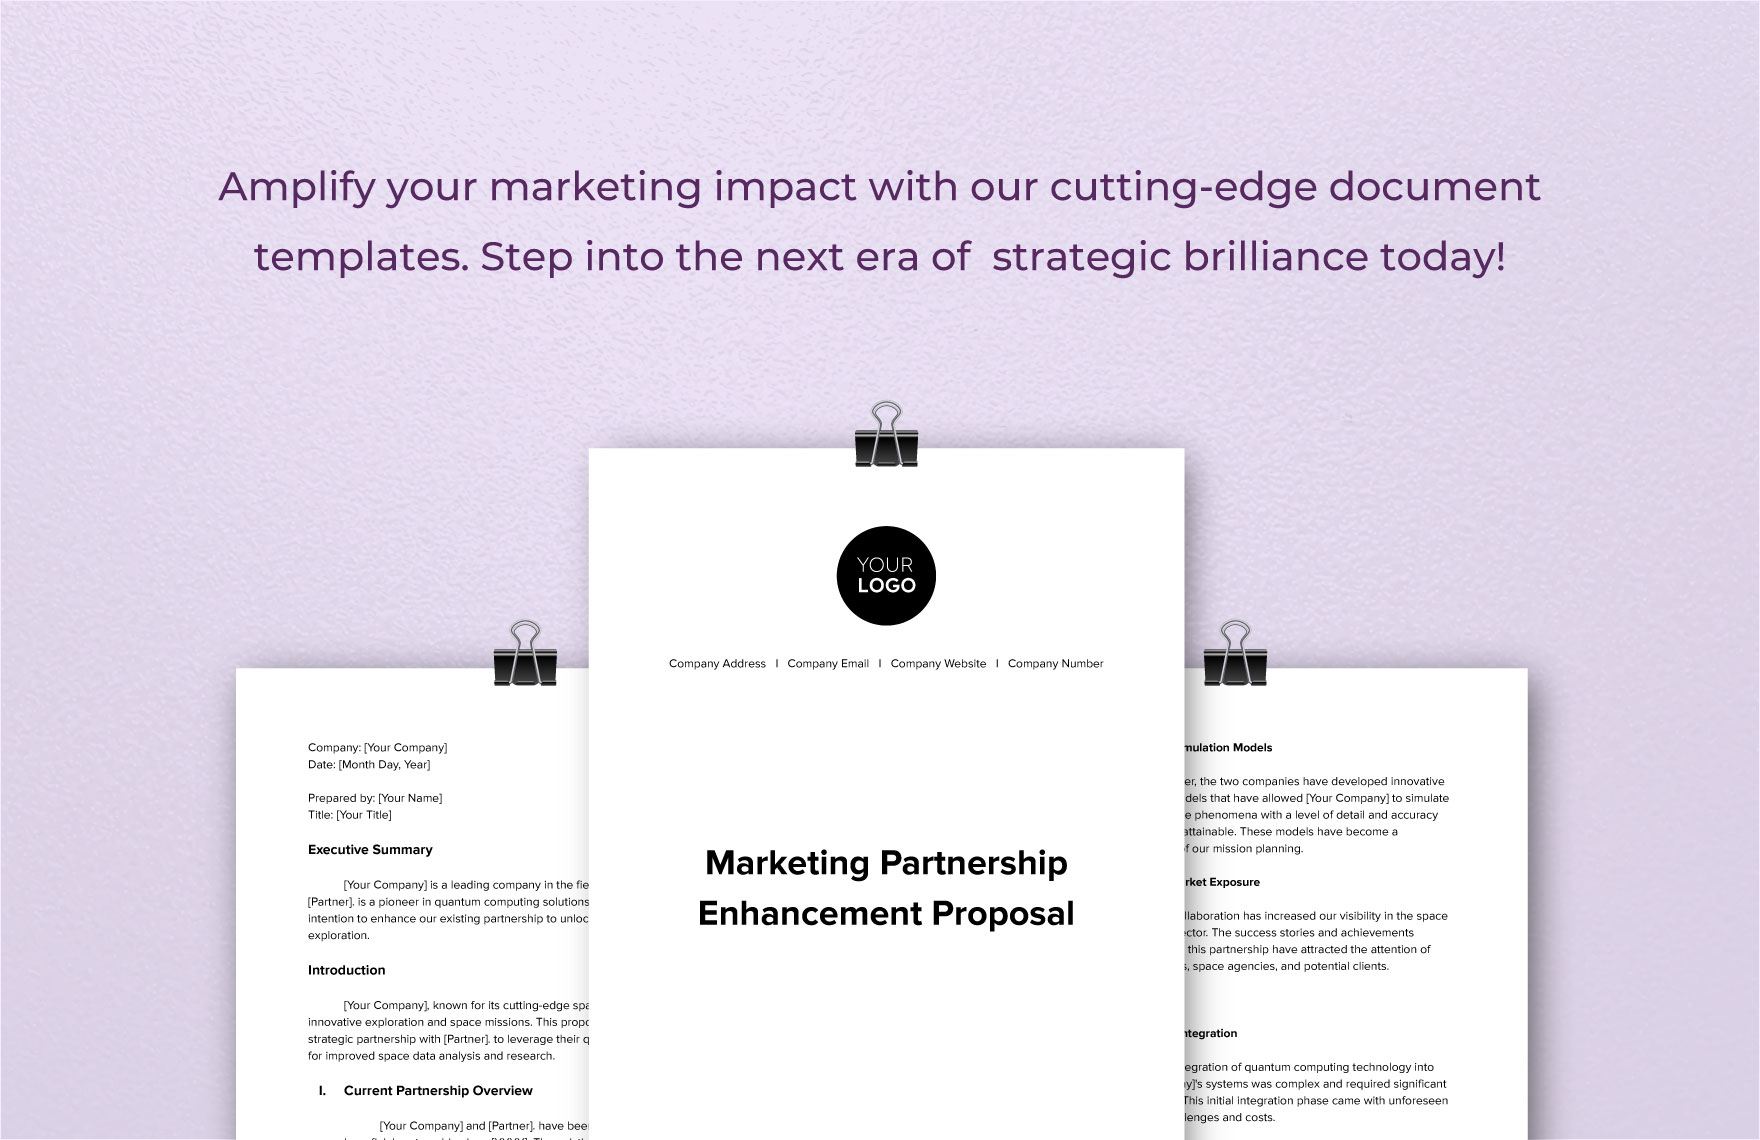 Marketing Partnership Enhancement Proposal Template